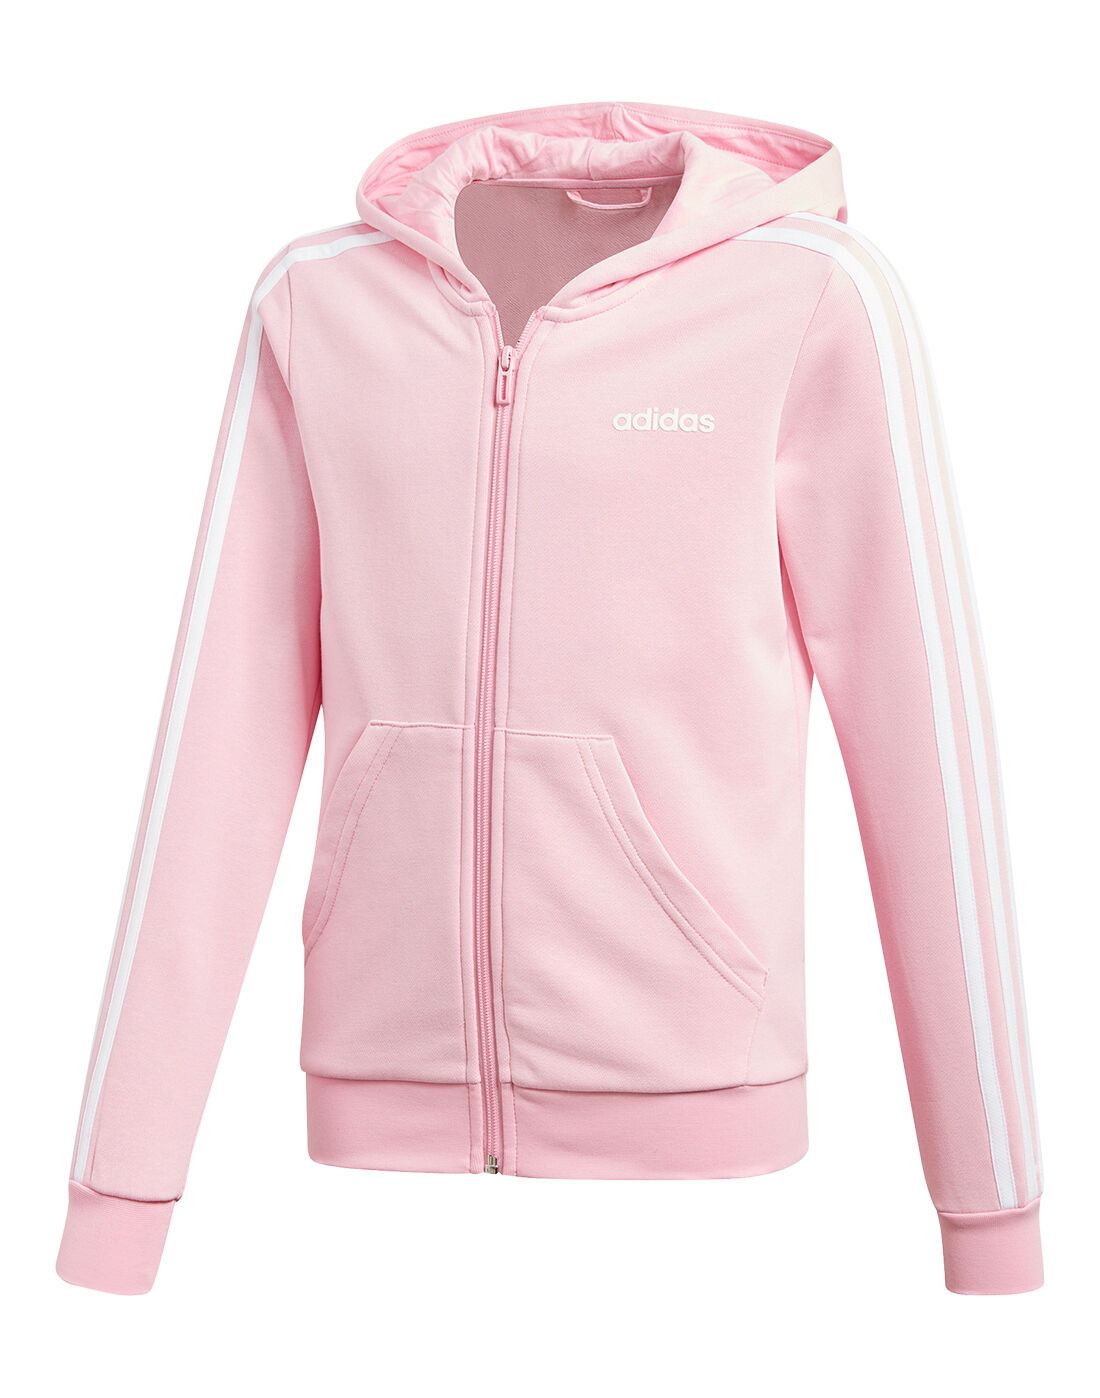 adidas girls pink hoodie